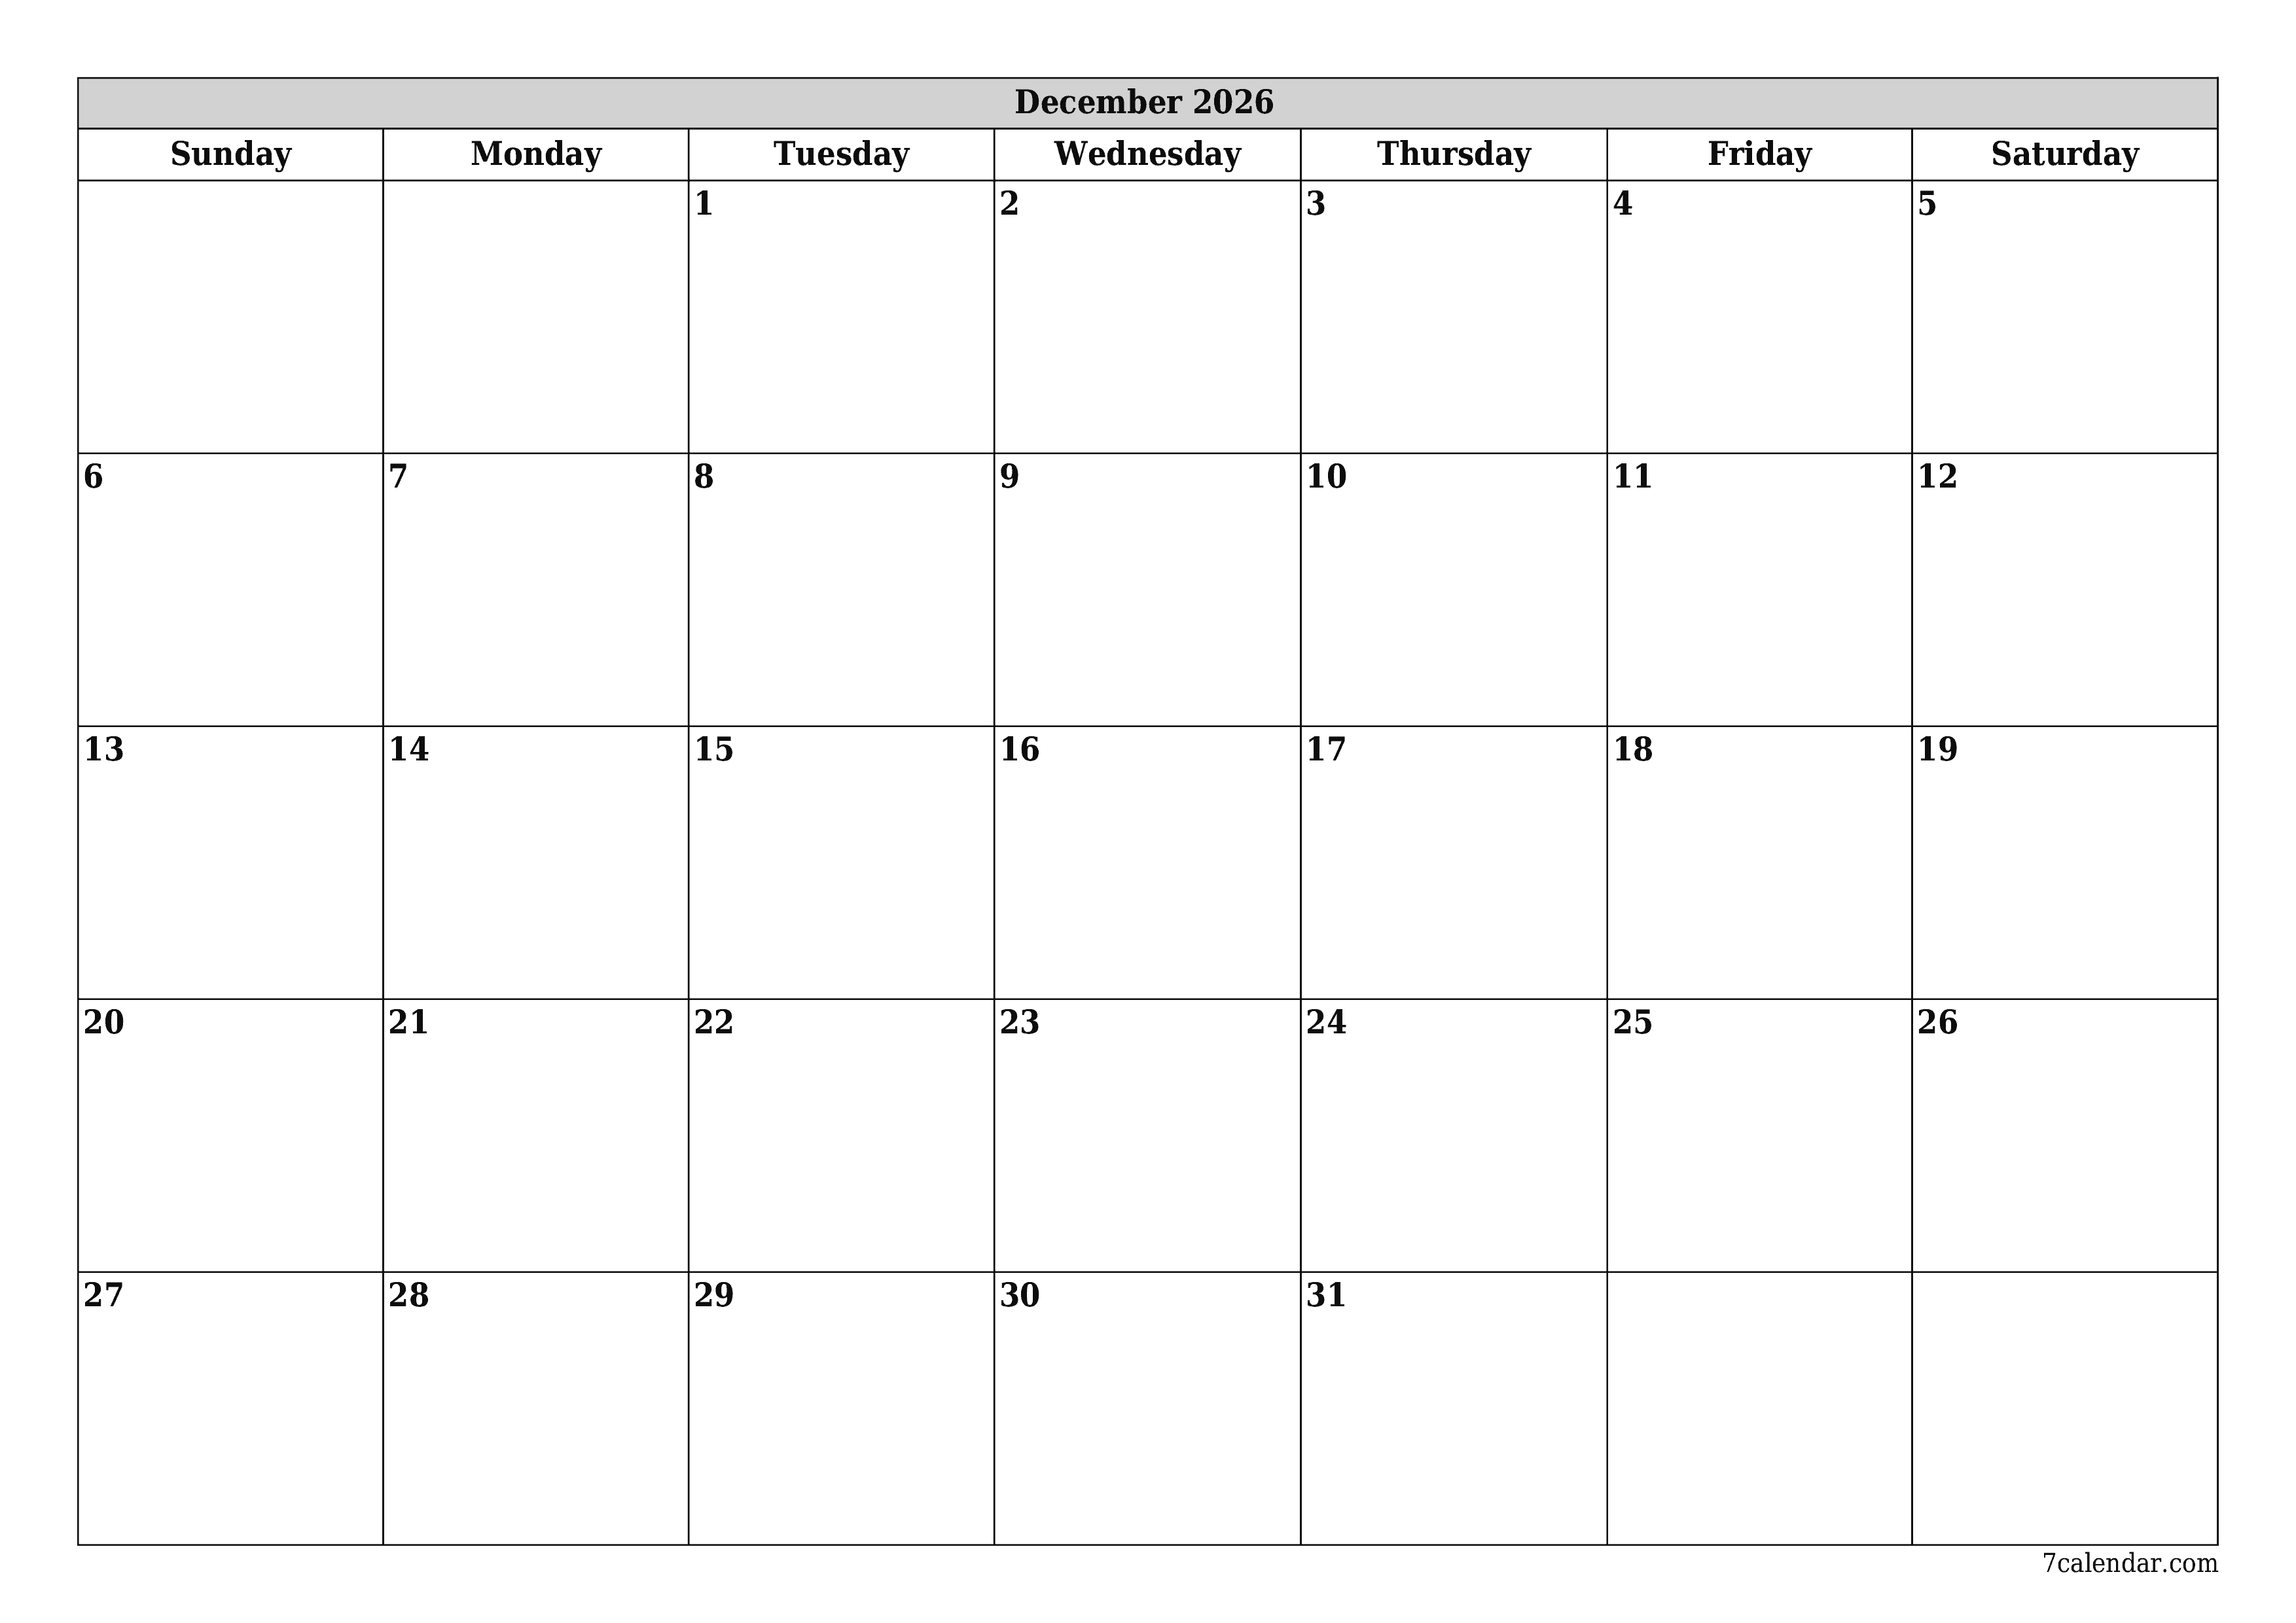 printable wall template free horizontal Monthly planner calendar December (Dec) 2026